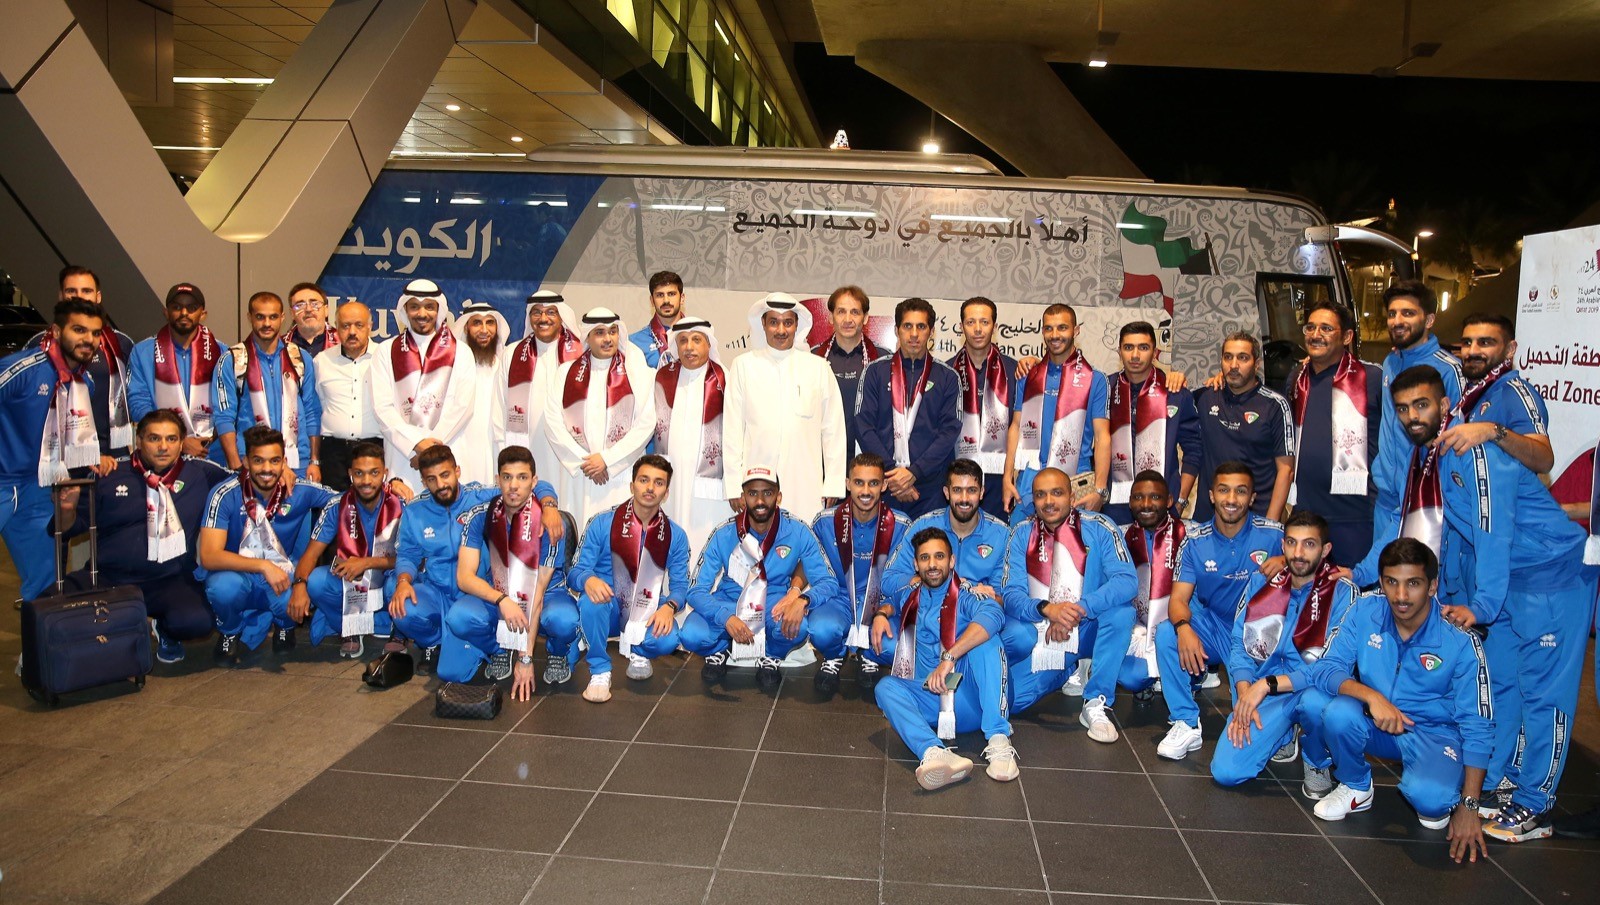 Kuwait's national soccer team arrives in Doha 